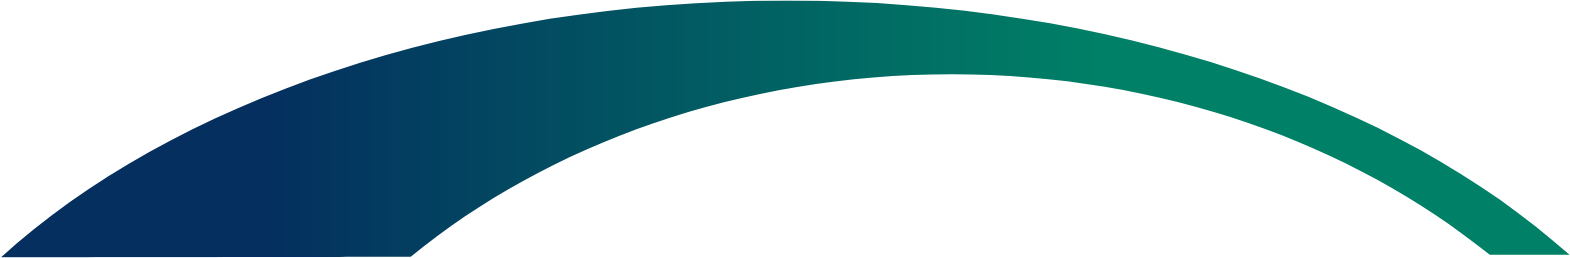 Banco BPM logo (PNG transparent)